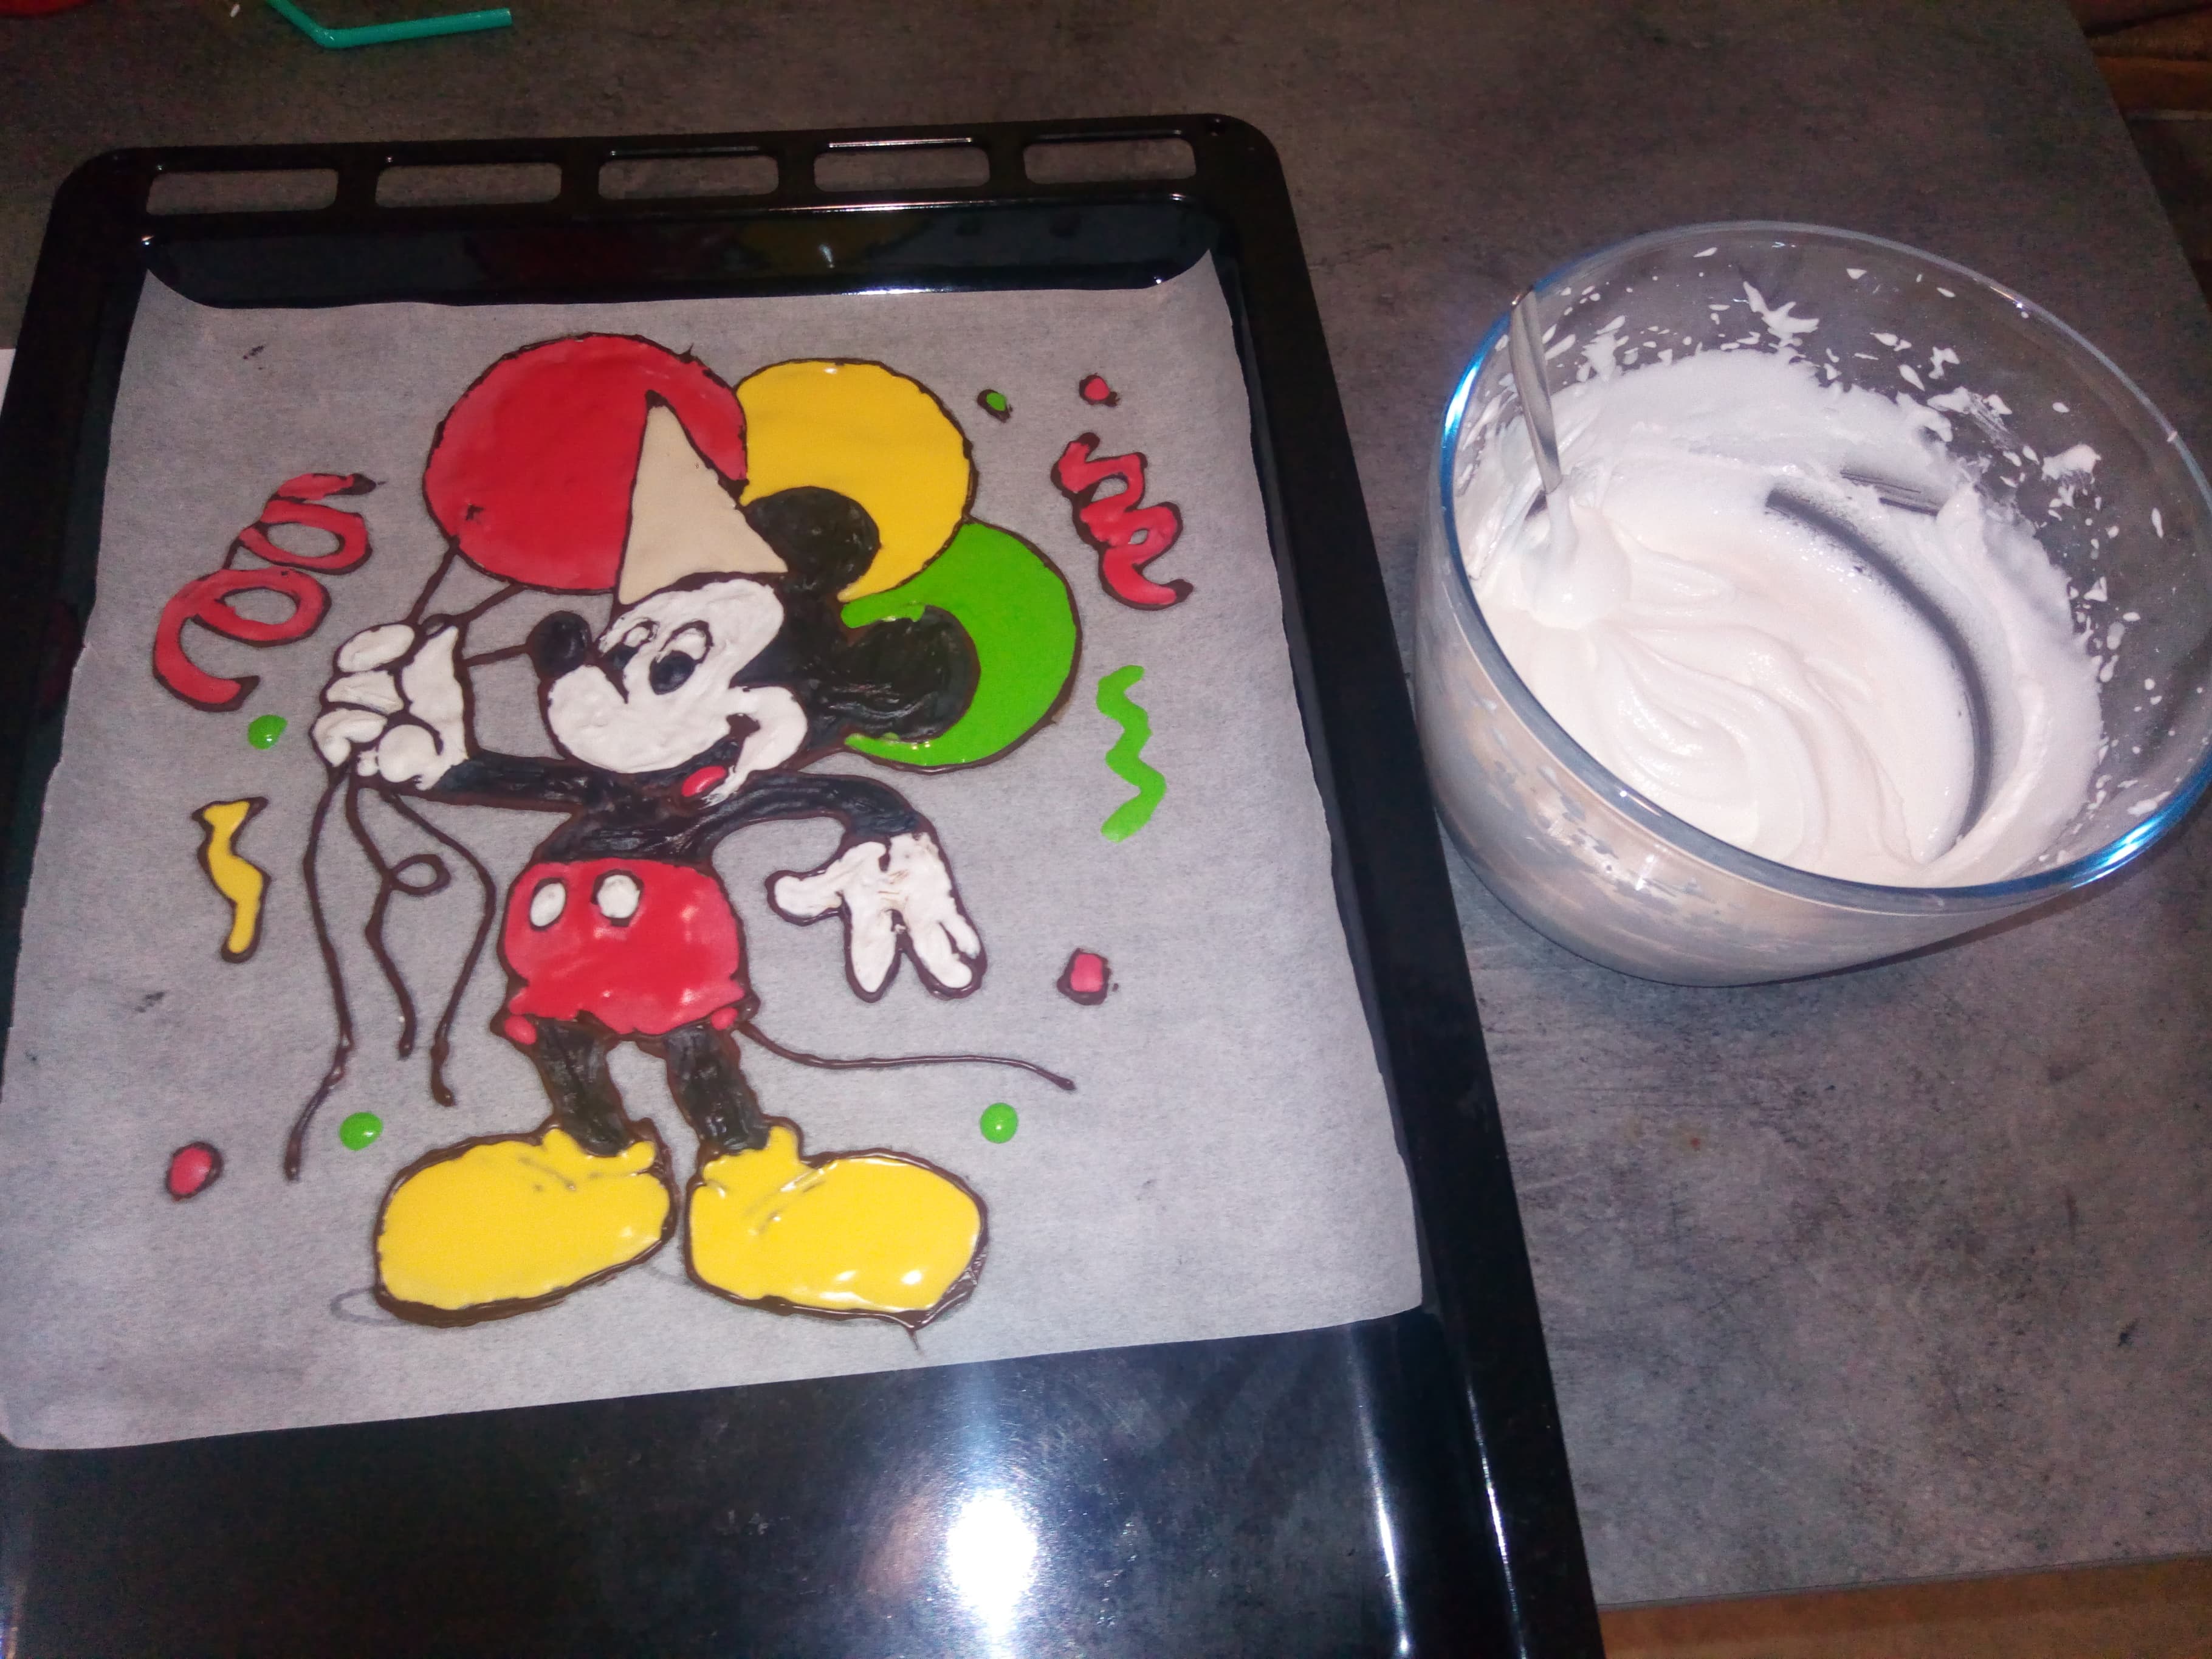 Desert tort aniversar Mickey Mouse